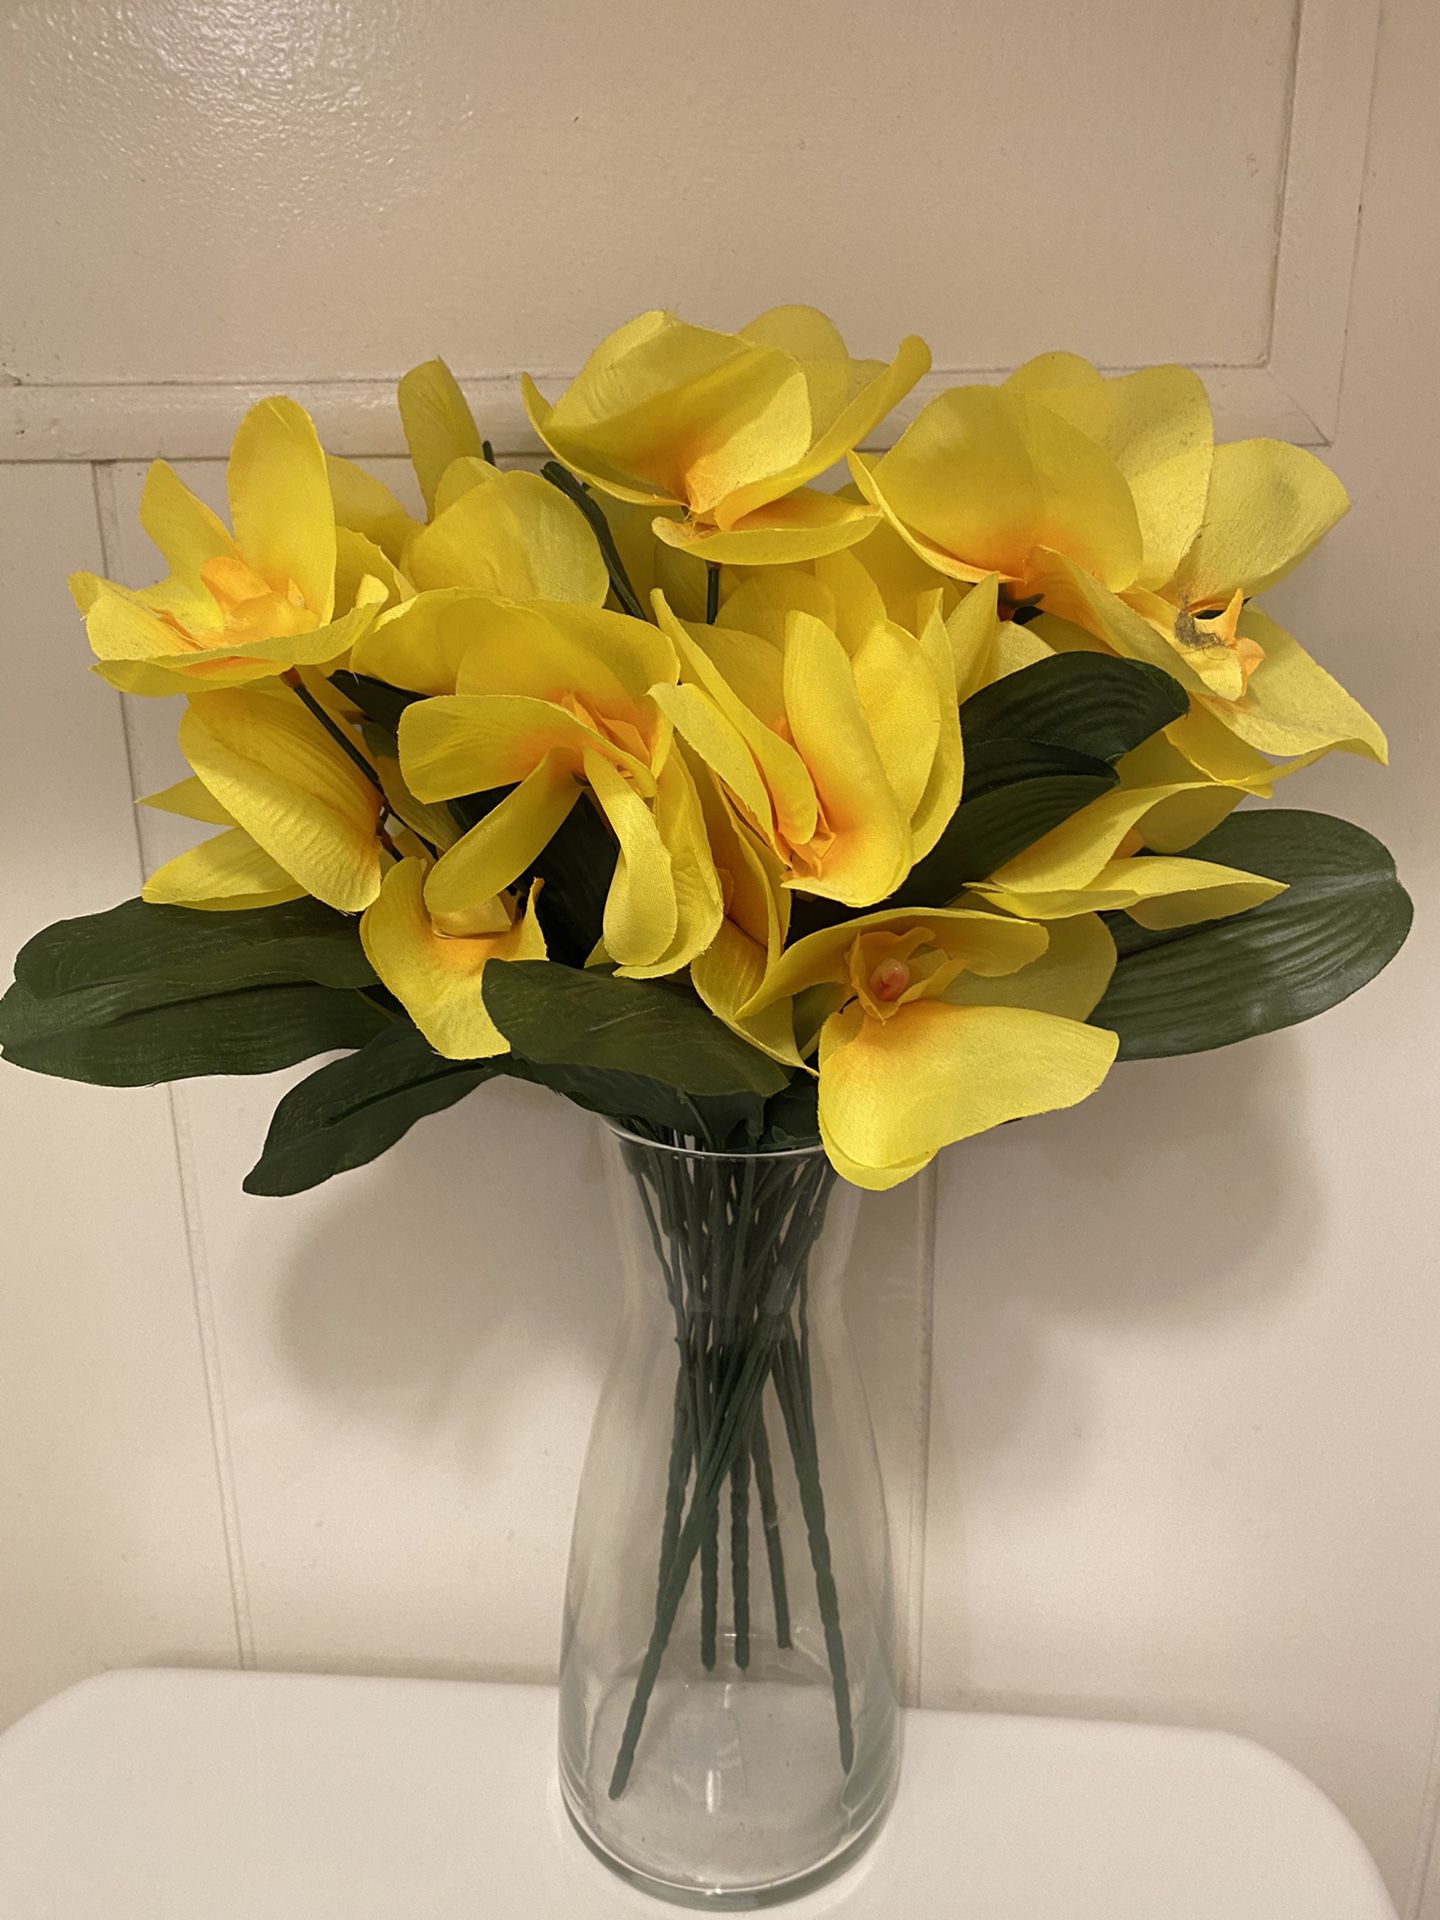 Flower 🌺 Decoration And Vase